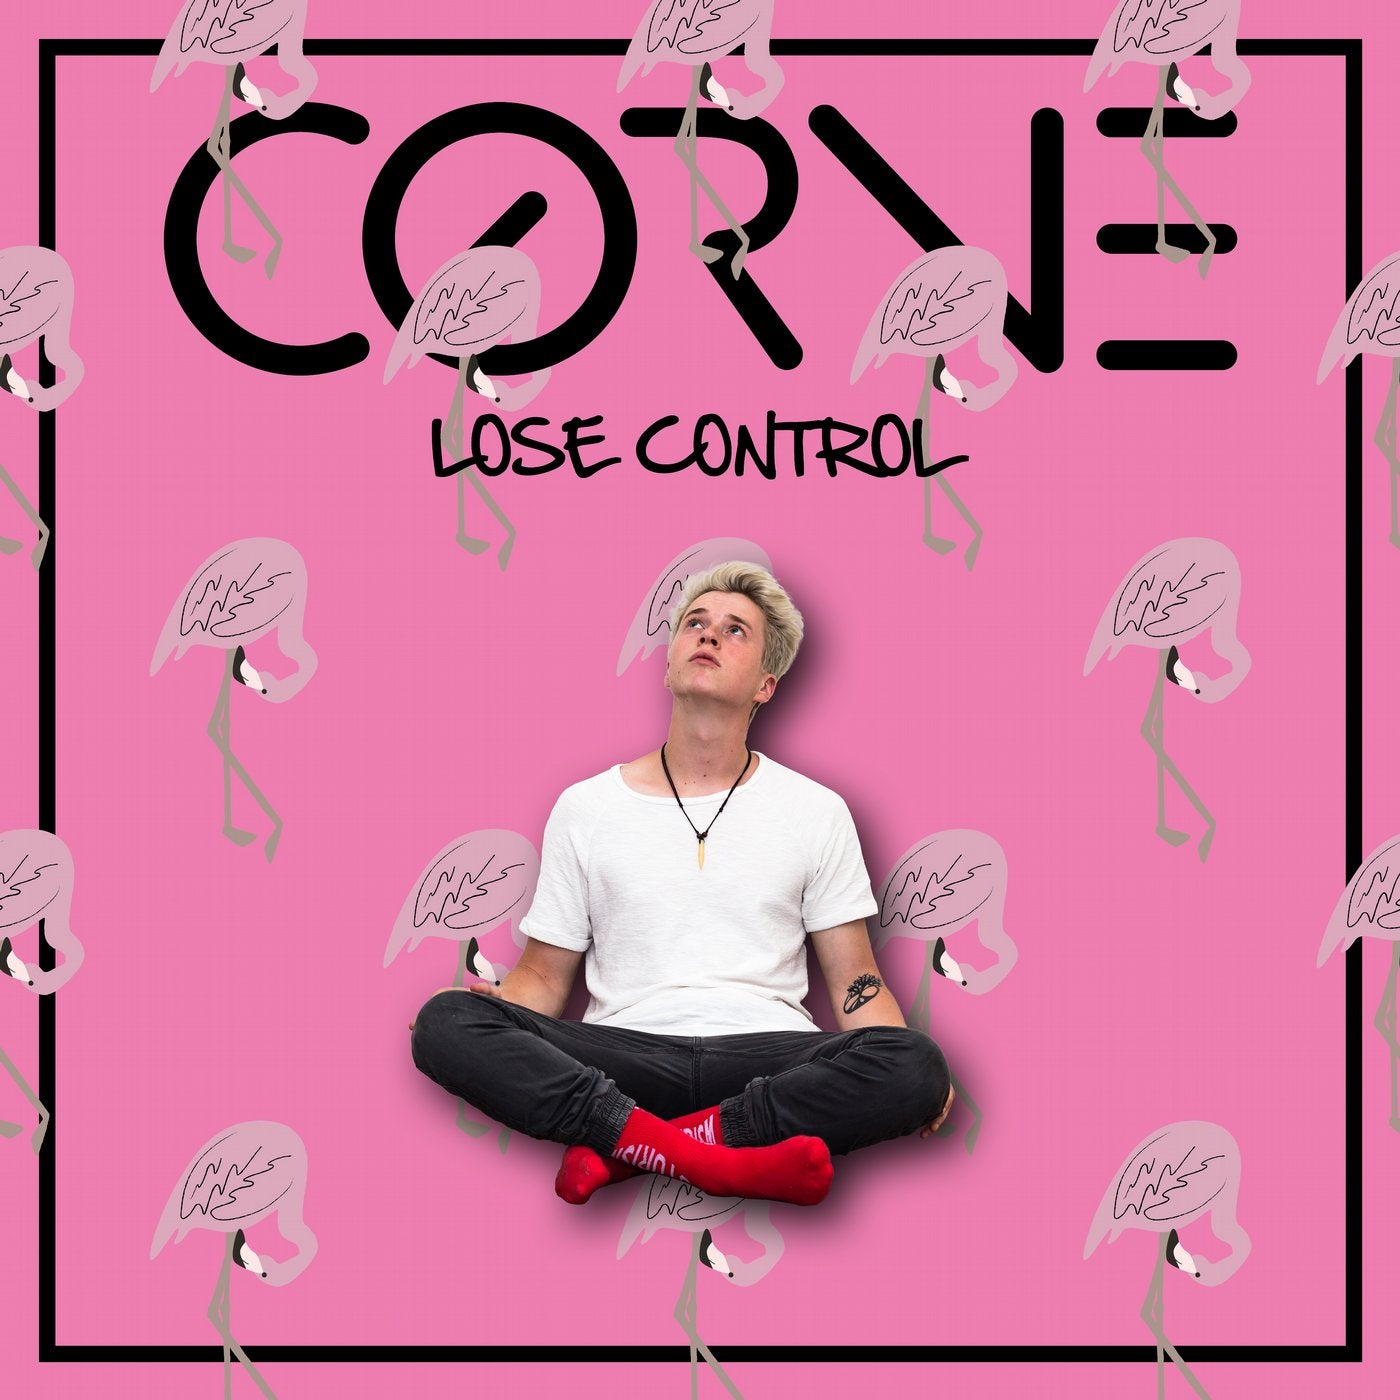 Lose Control.